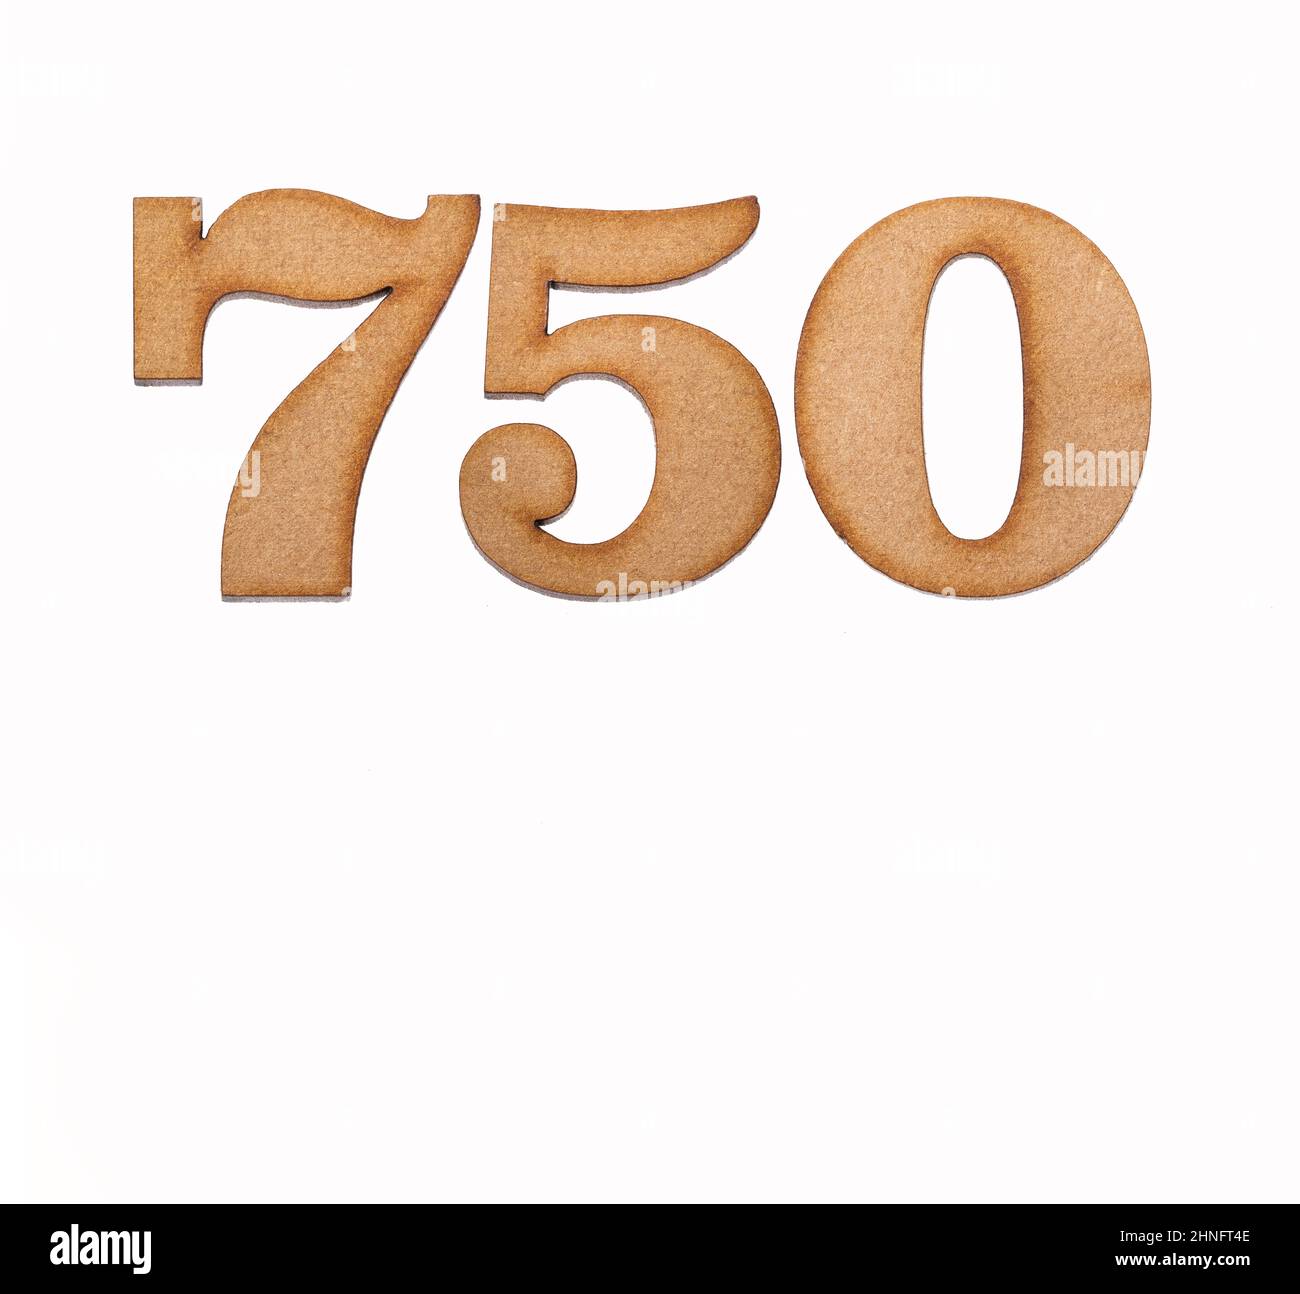 33,750 Wooden Plaque Images, Stock Photos, 3D objects, & Vectors